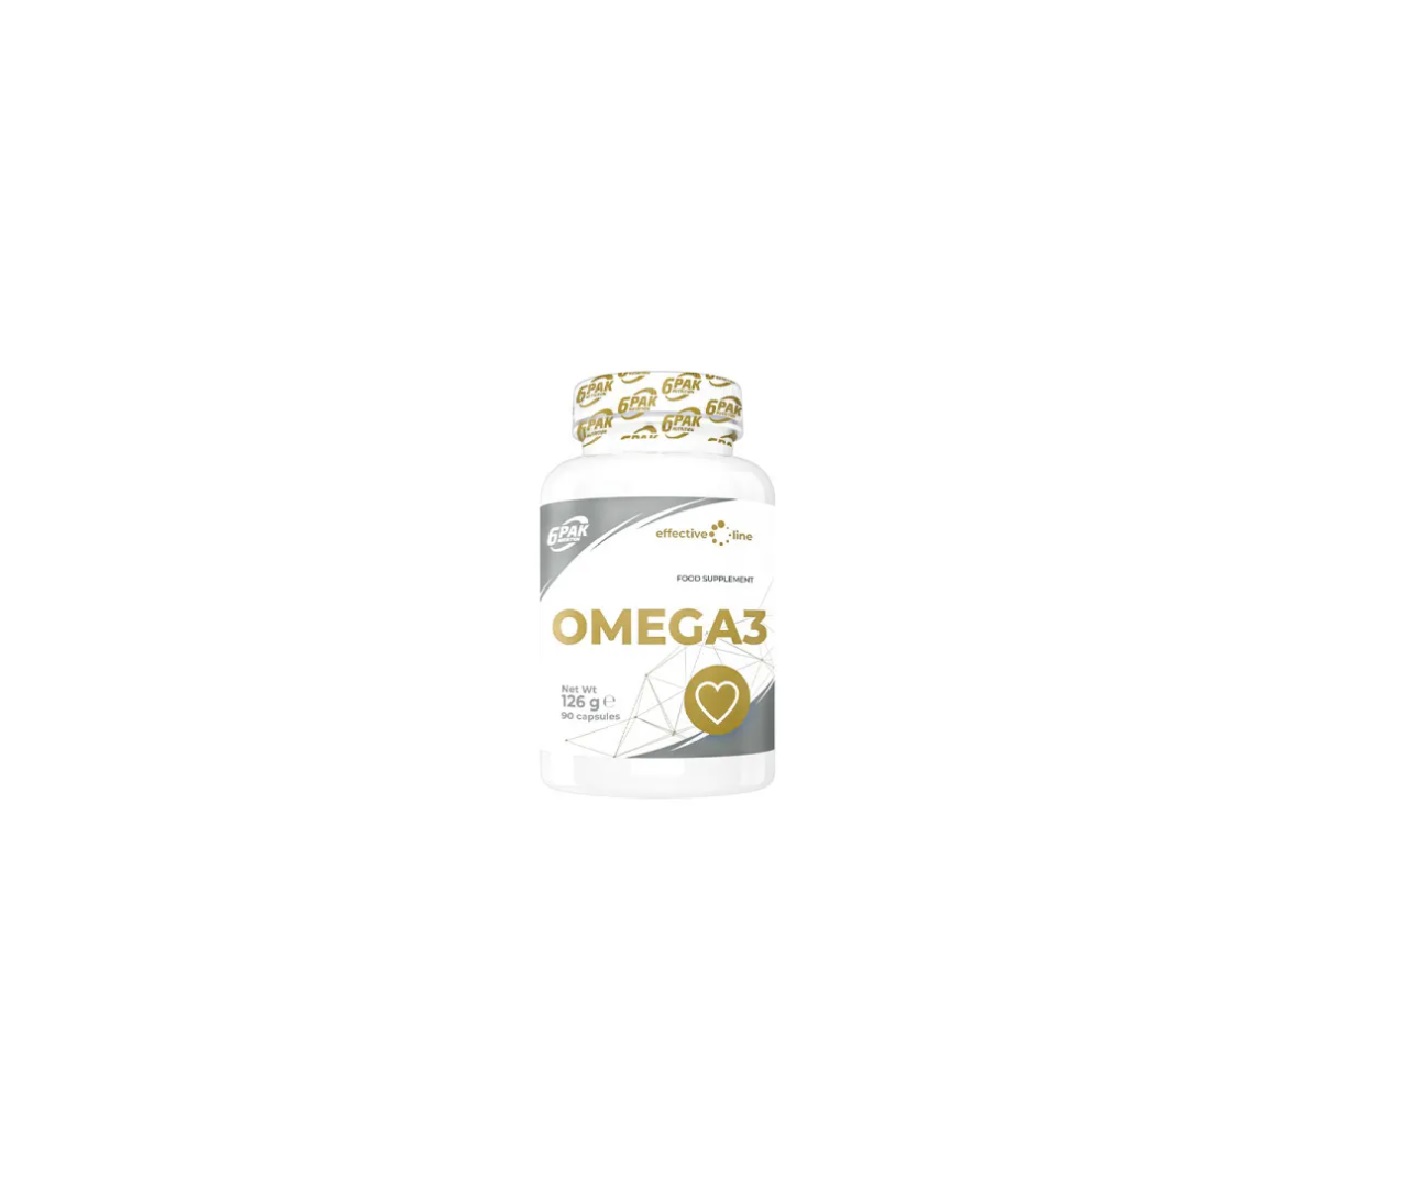 6PAK Nutrition omega 3 